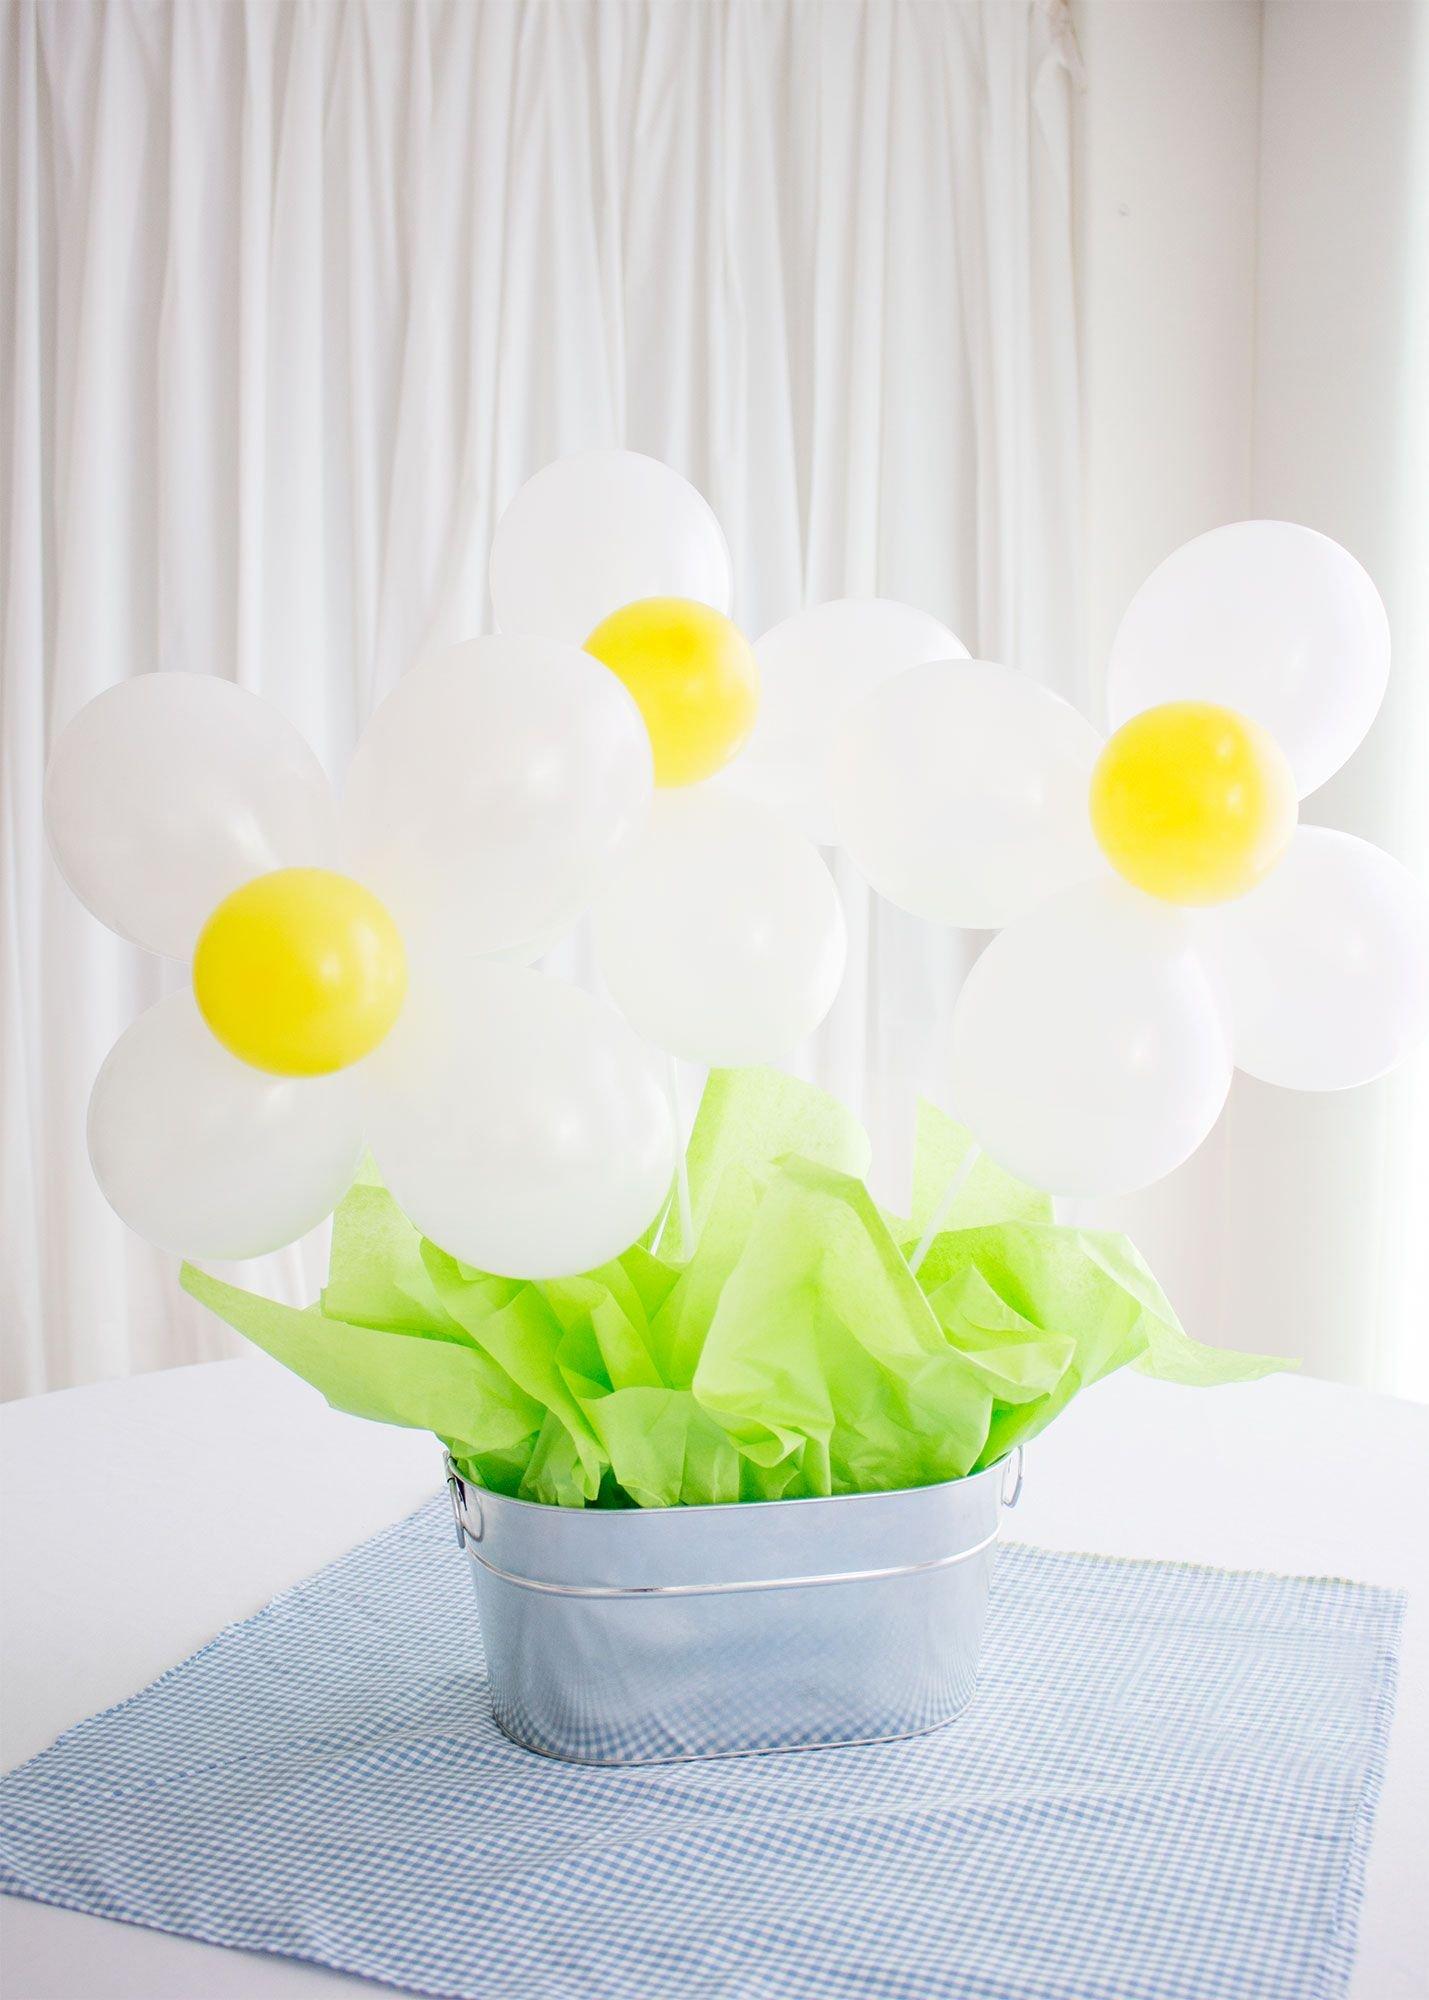 21 Balloon Centerpiece Ideas  Flower power party, Balloon centerpieces,  Trendy party decor